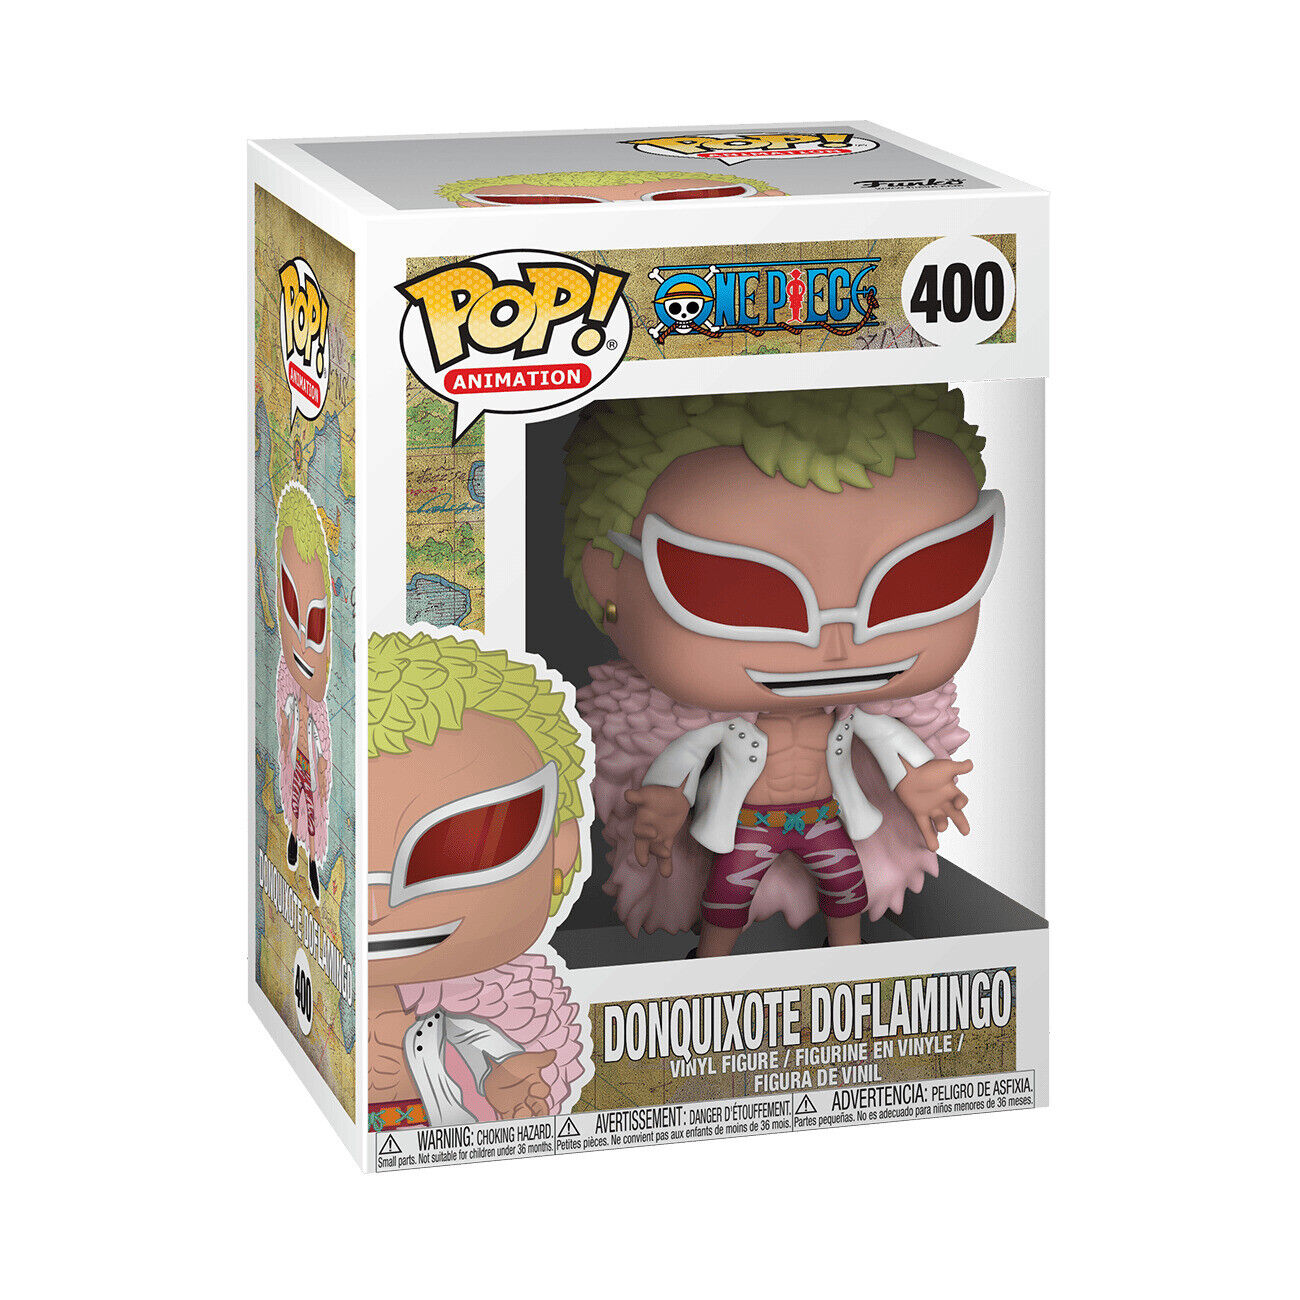 One Piece - Donquixote Doflamingo - Funko Pop! Animation (400)